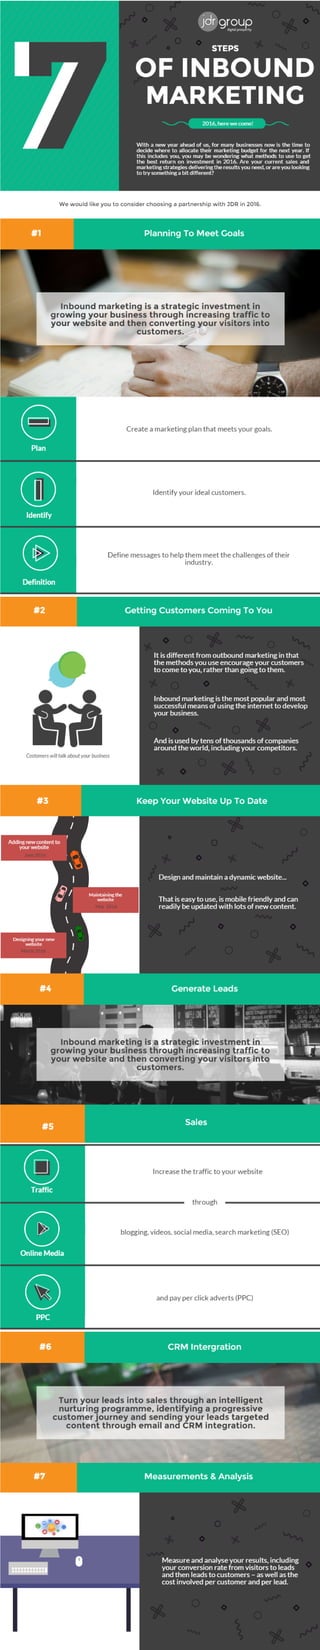 7 steps of inbound marketing infographic (1)